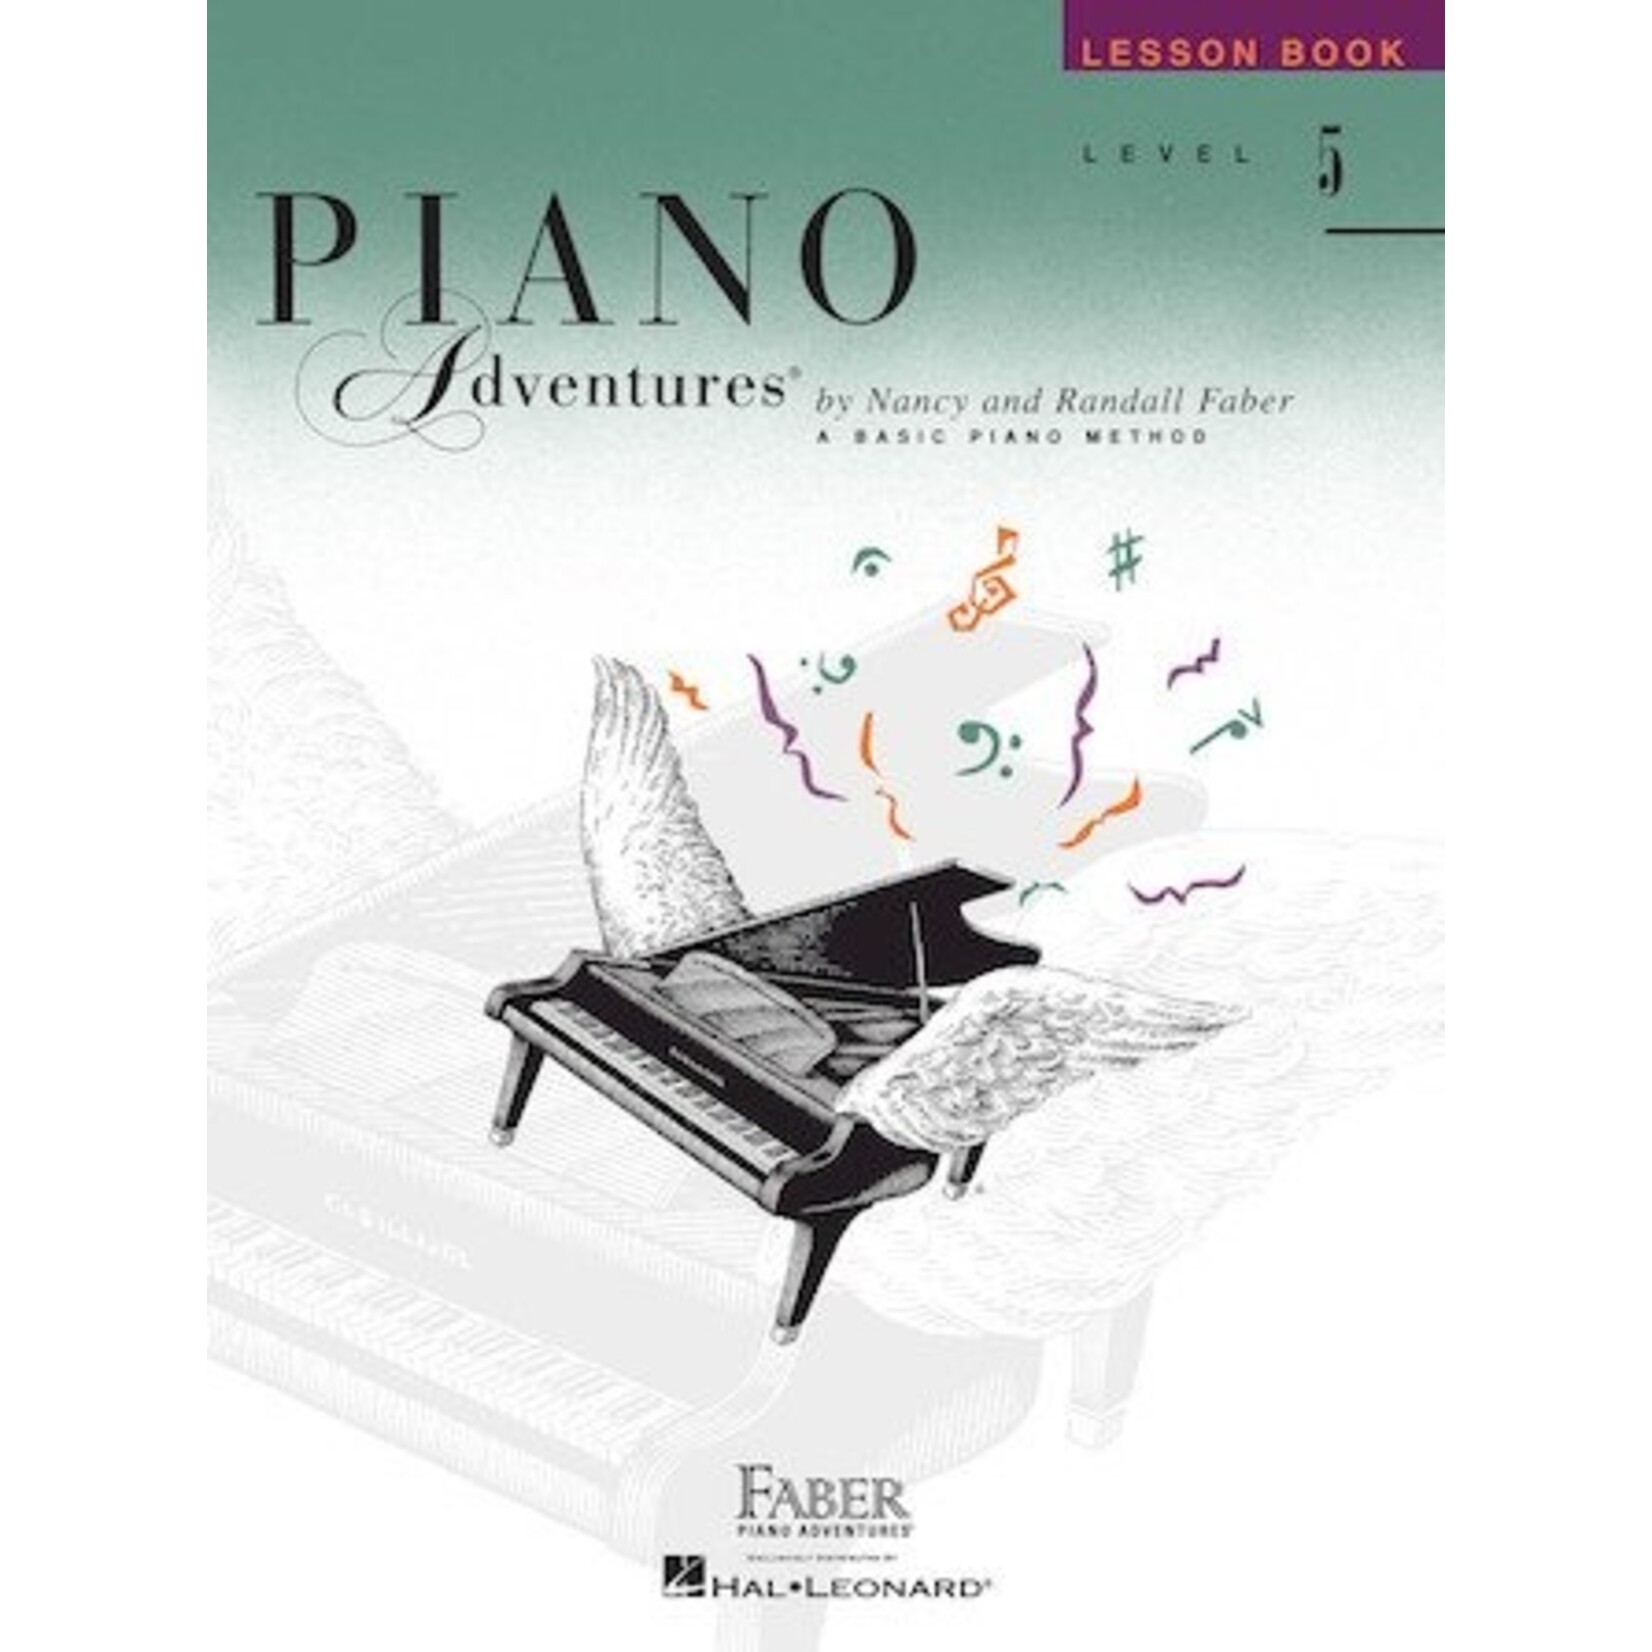 Faber Piano Adventures Level 5 - Lesson Book - Faber